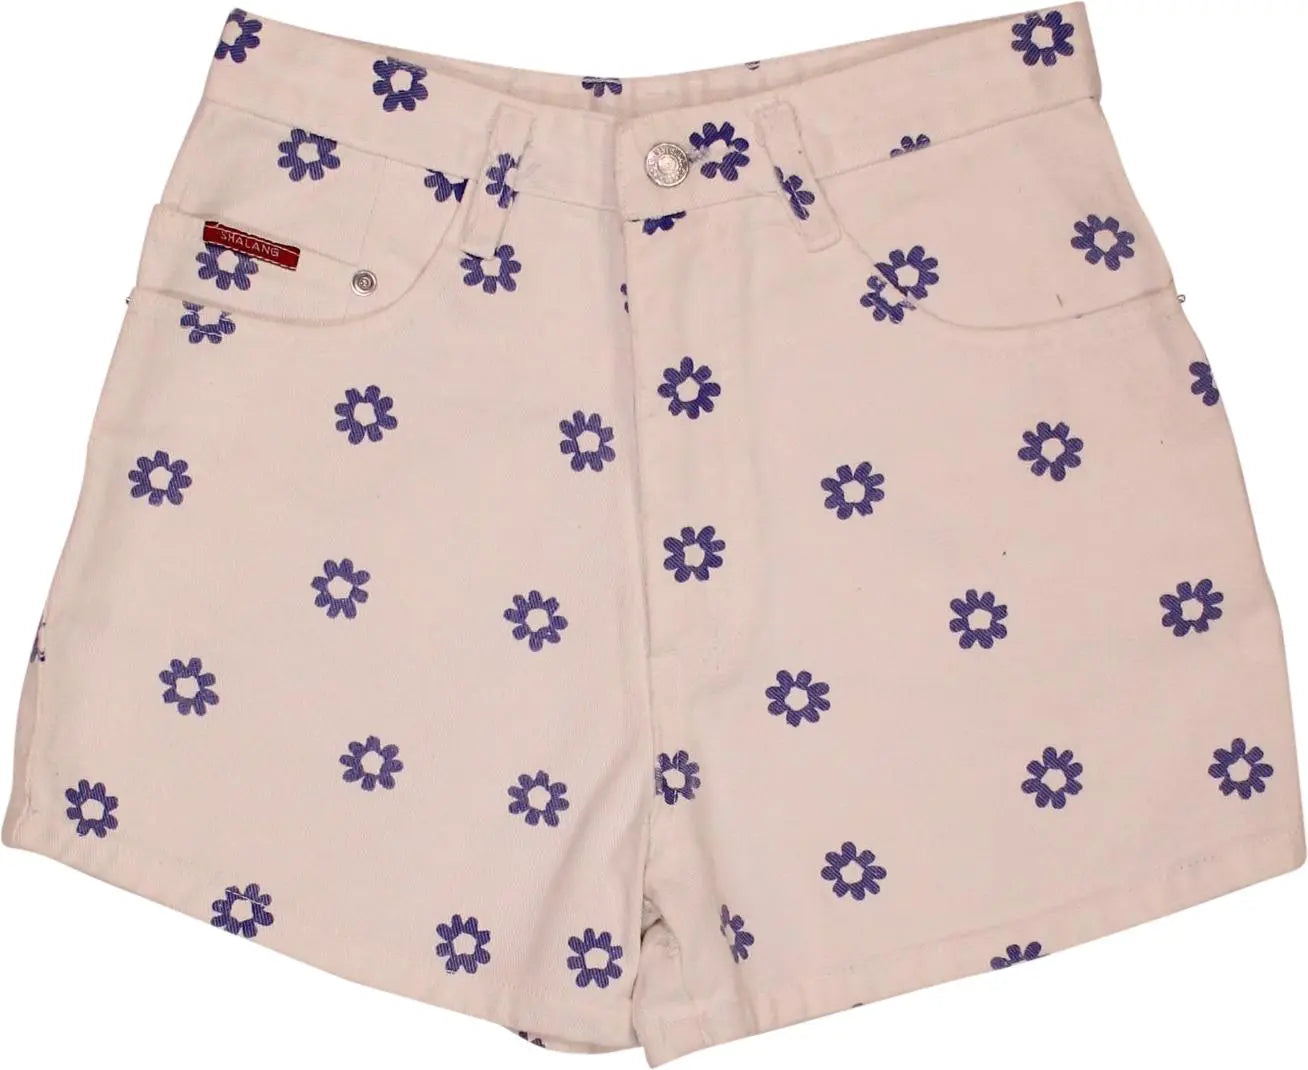 Shalang - Floral Denim Shorts- ThriftTale.com - Vintage and second handclothing